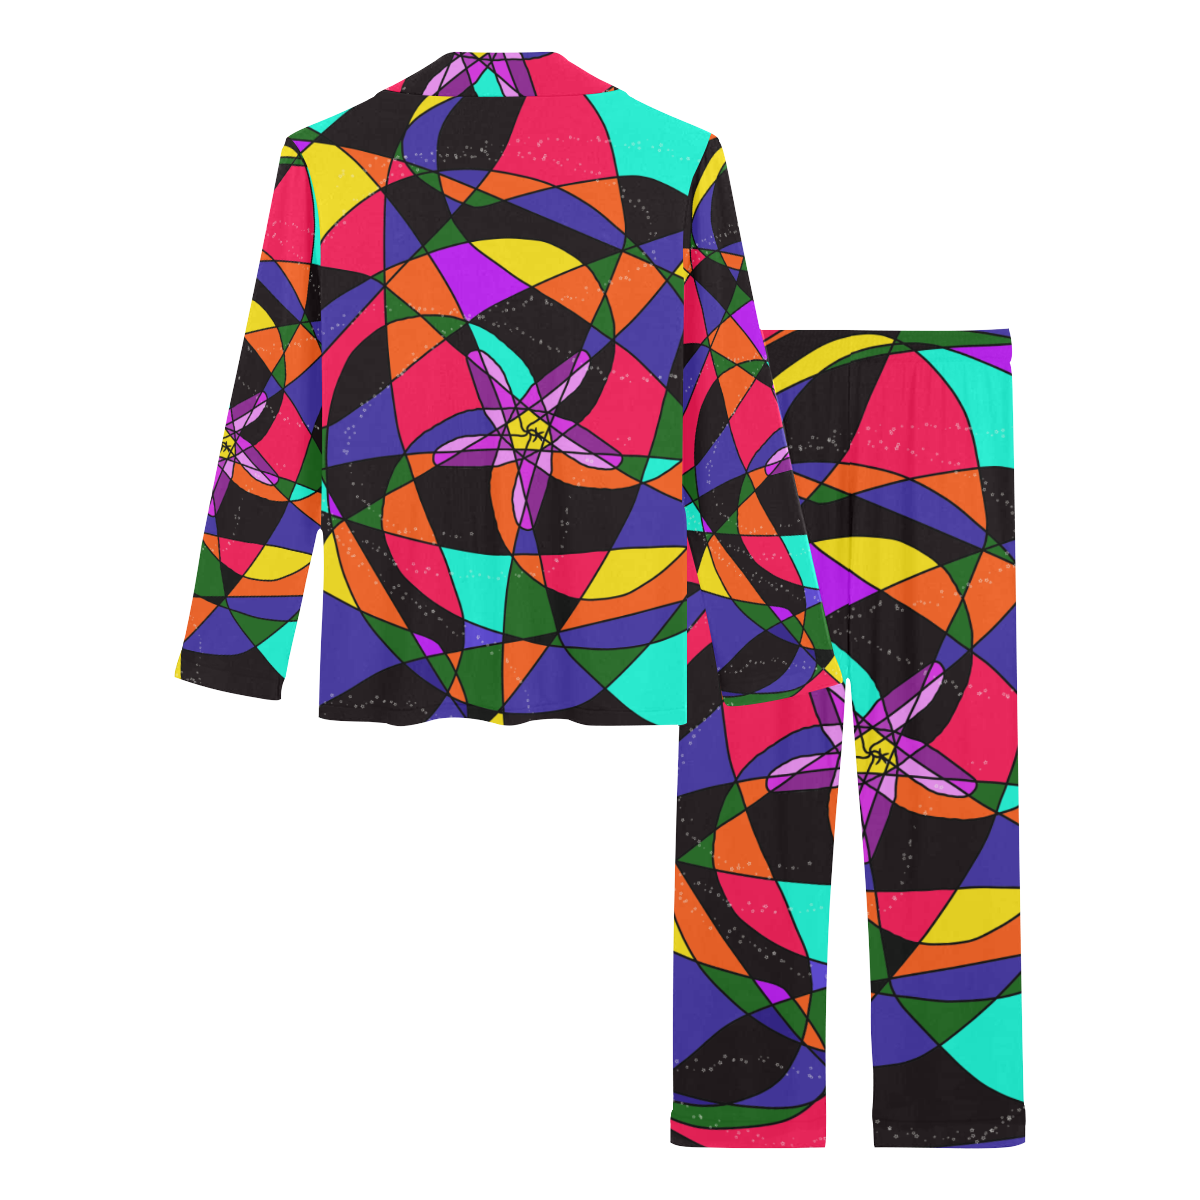 Abstract Design S 2020 Women's Long Pajama Set